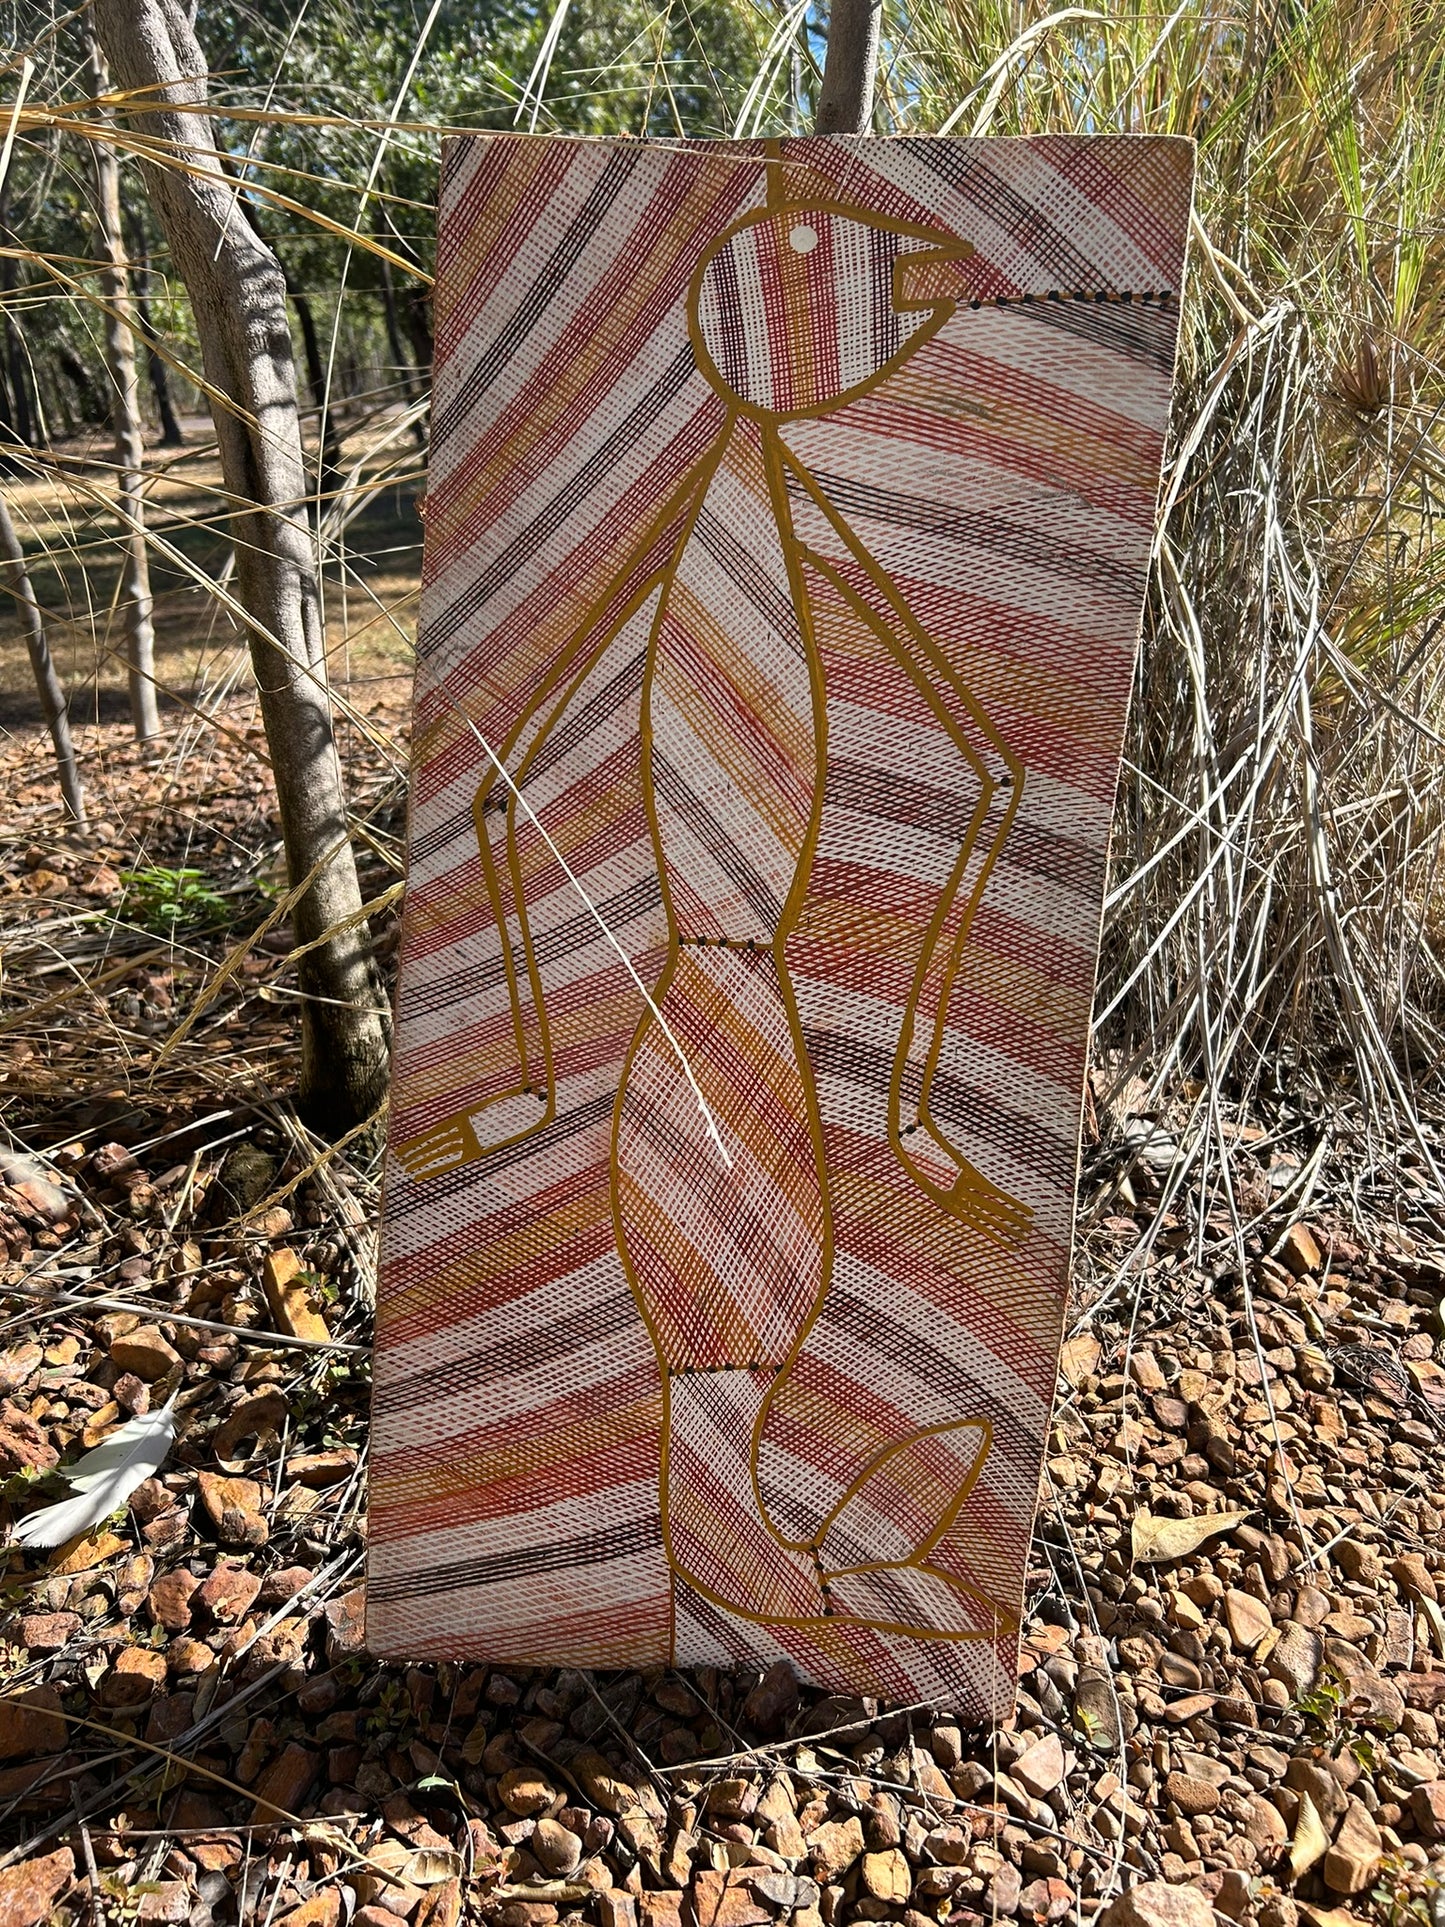 Authentic Aboriginal Bark painting by Bininj Artist of Kakadu National Park